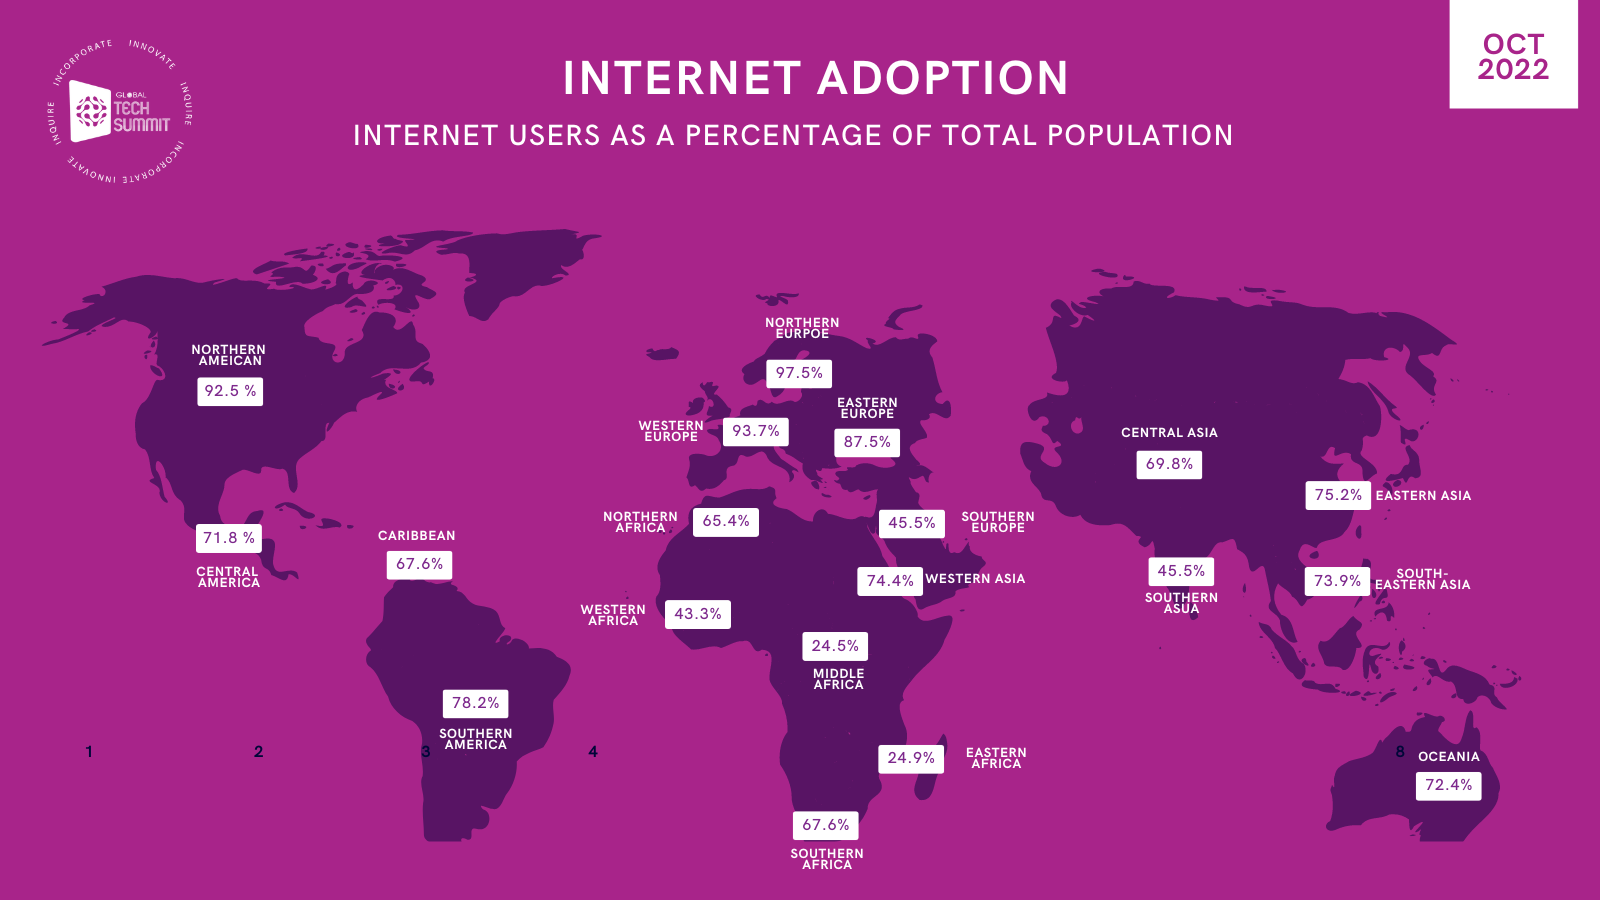 Internet Adoption